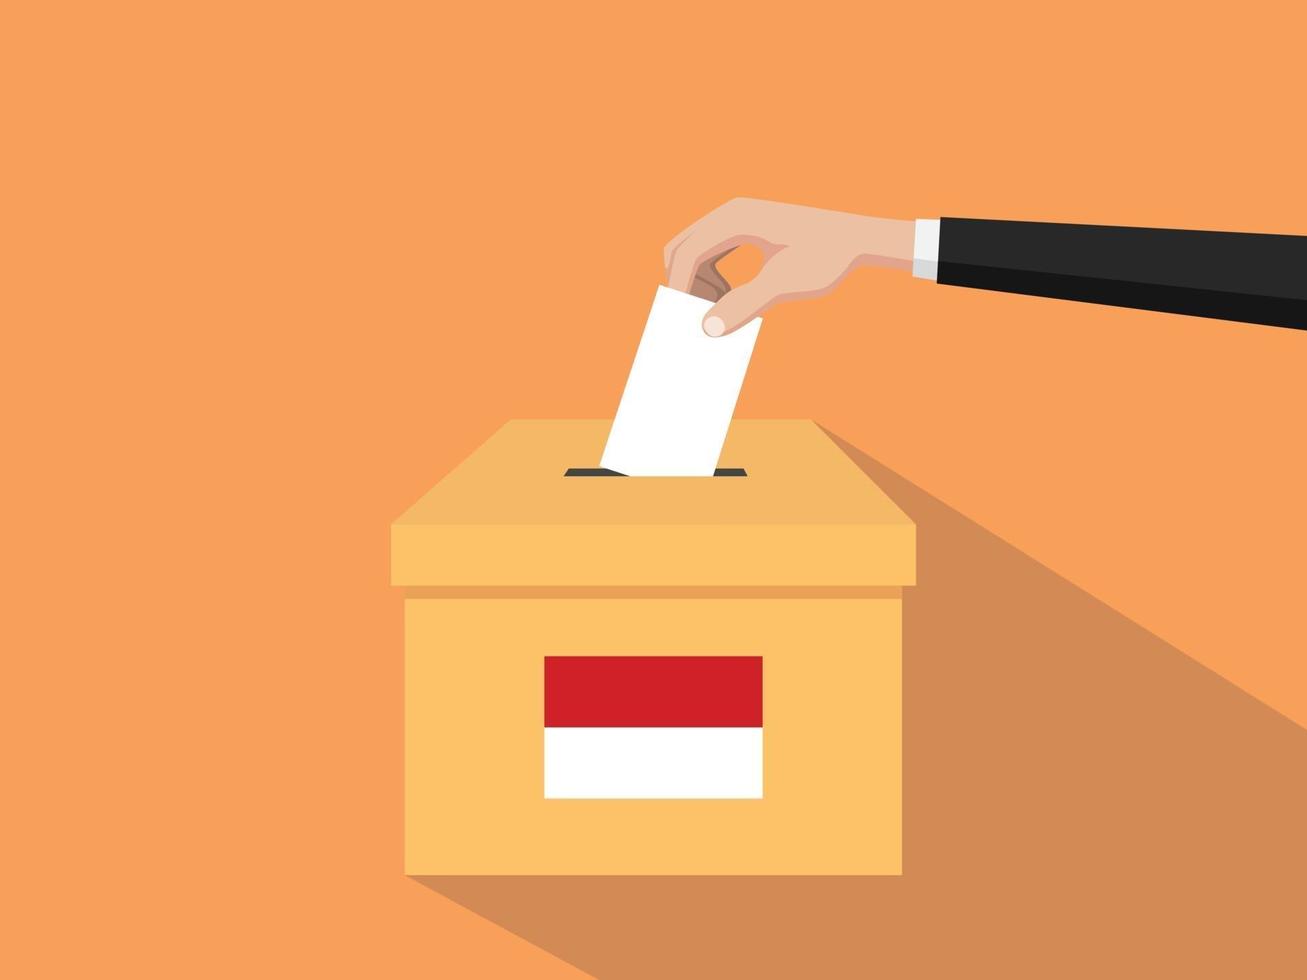 Indonesien Abstimmung Wahlkonzept Illustration vektor